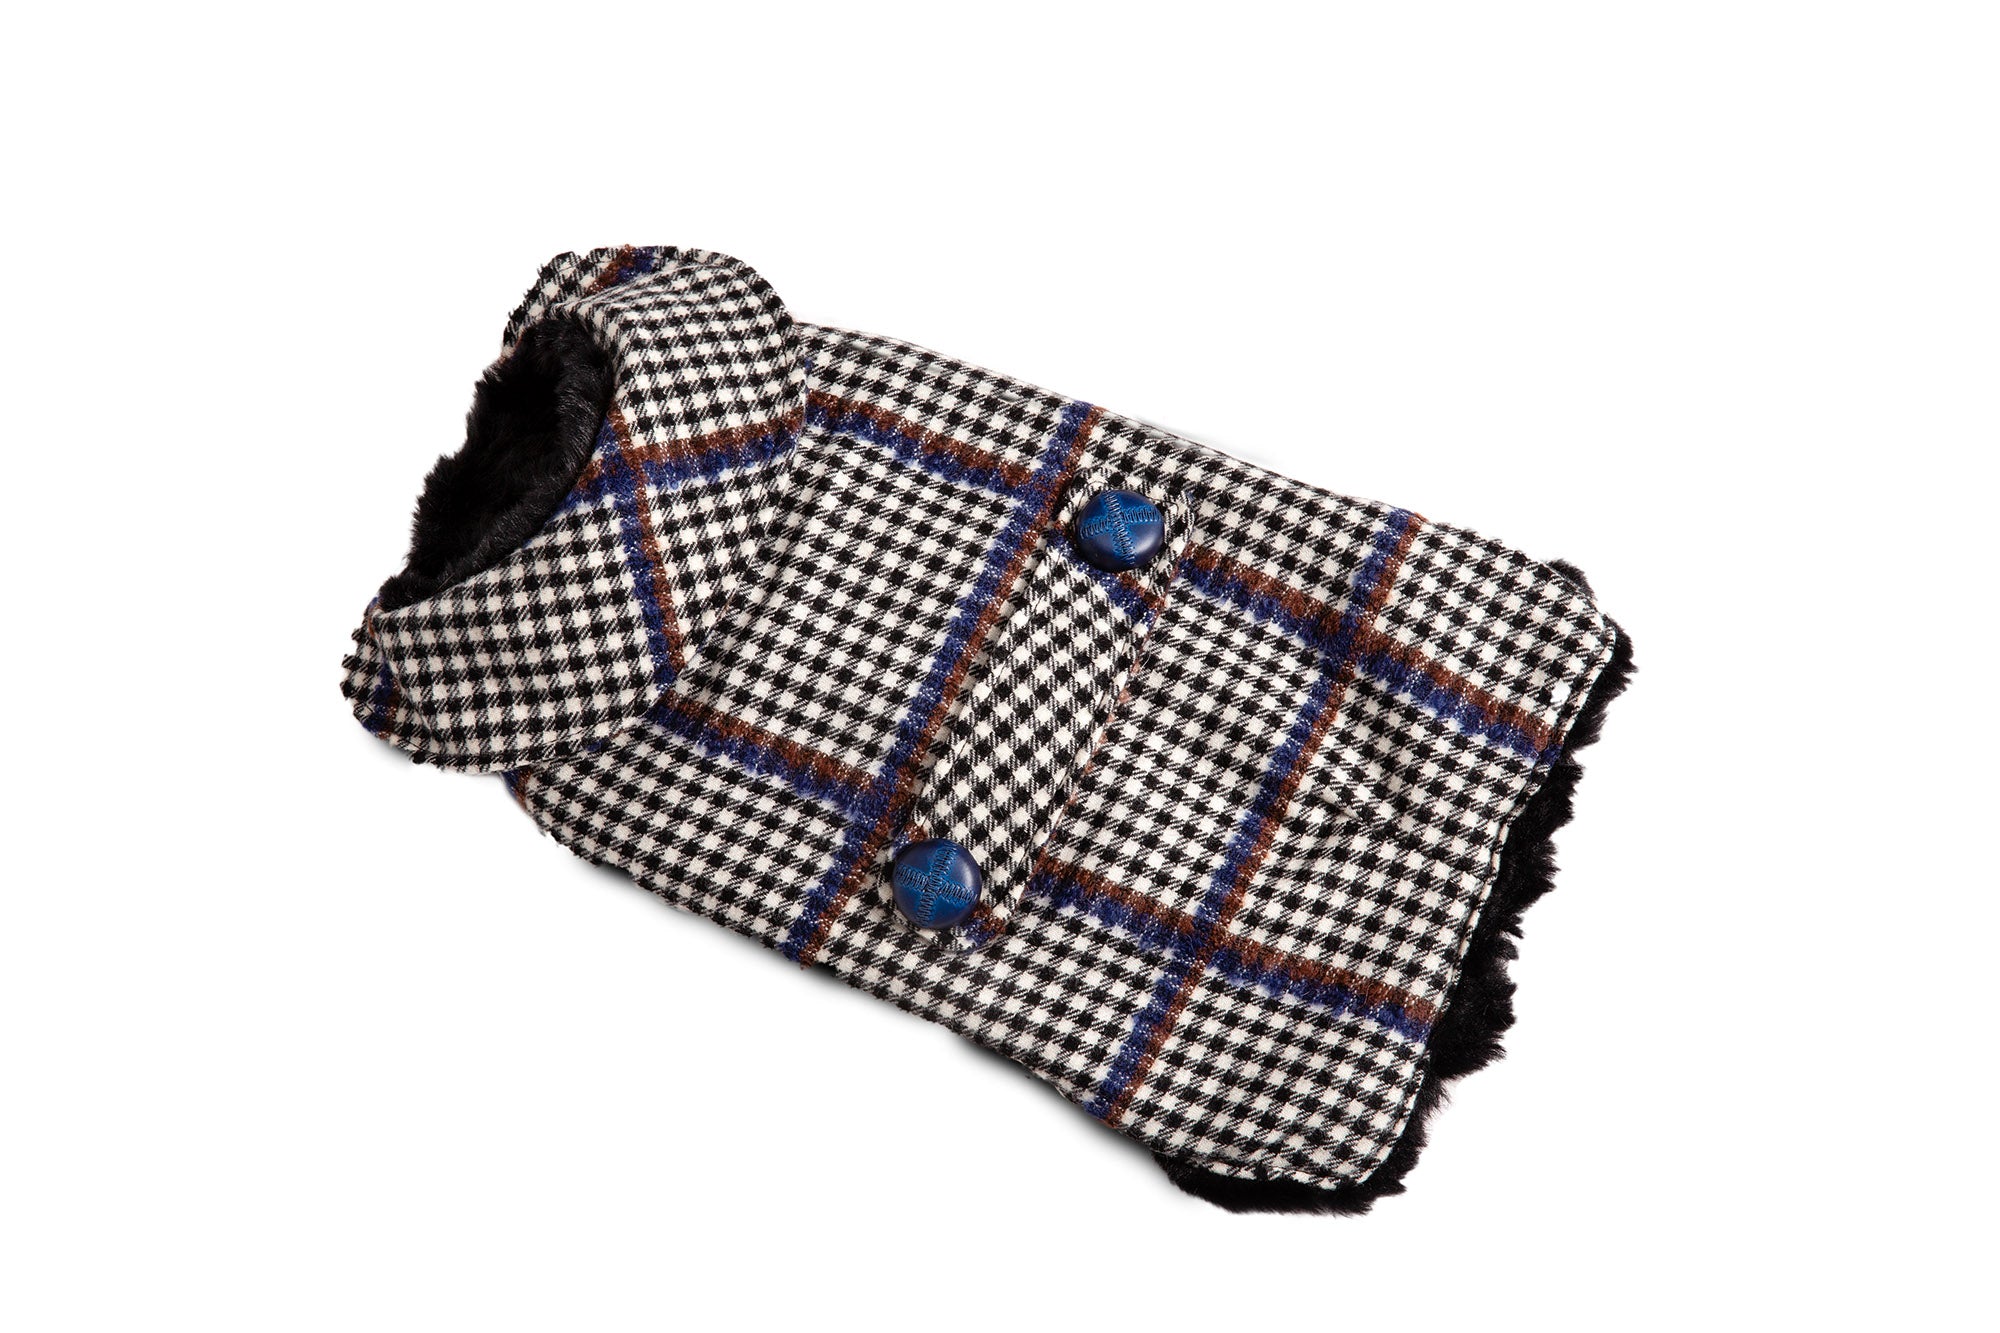 Dog Carrier - Winter - Blue, Brown & Black Wool Plaid Carrier - & Coat